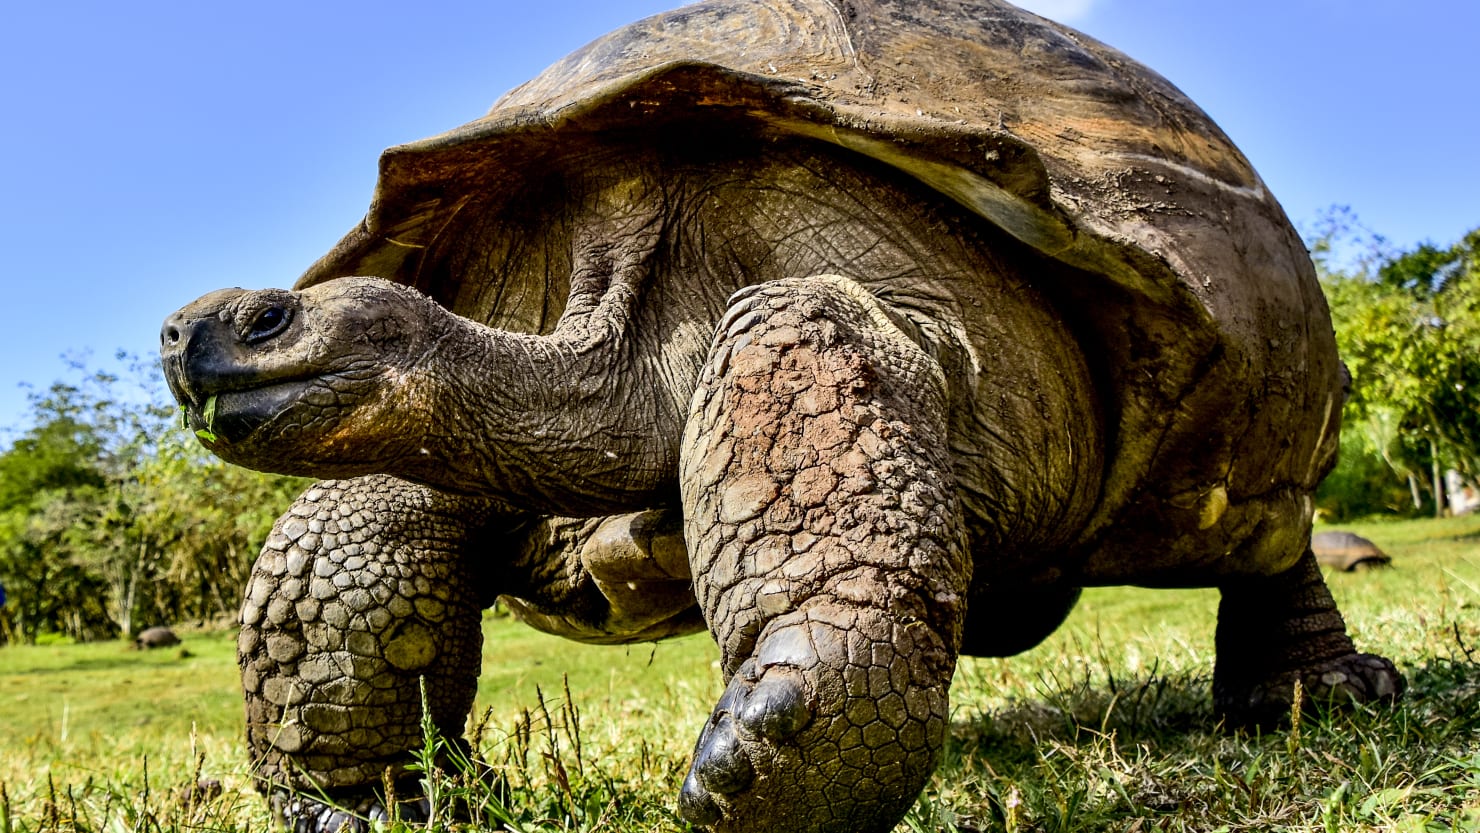 Giant tortoise of the galapagos islands jyktm1